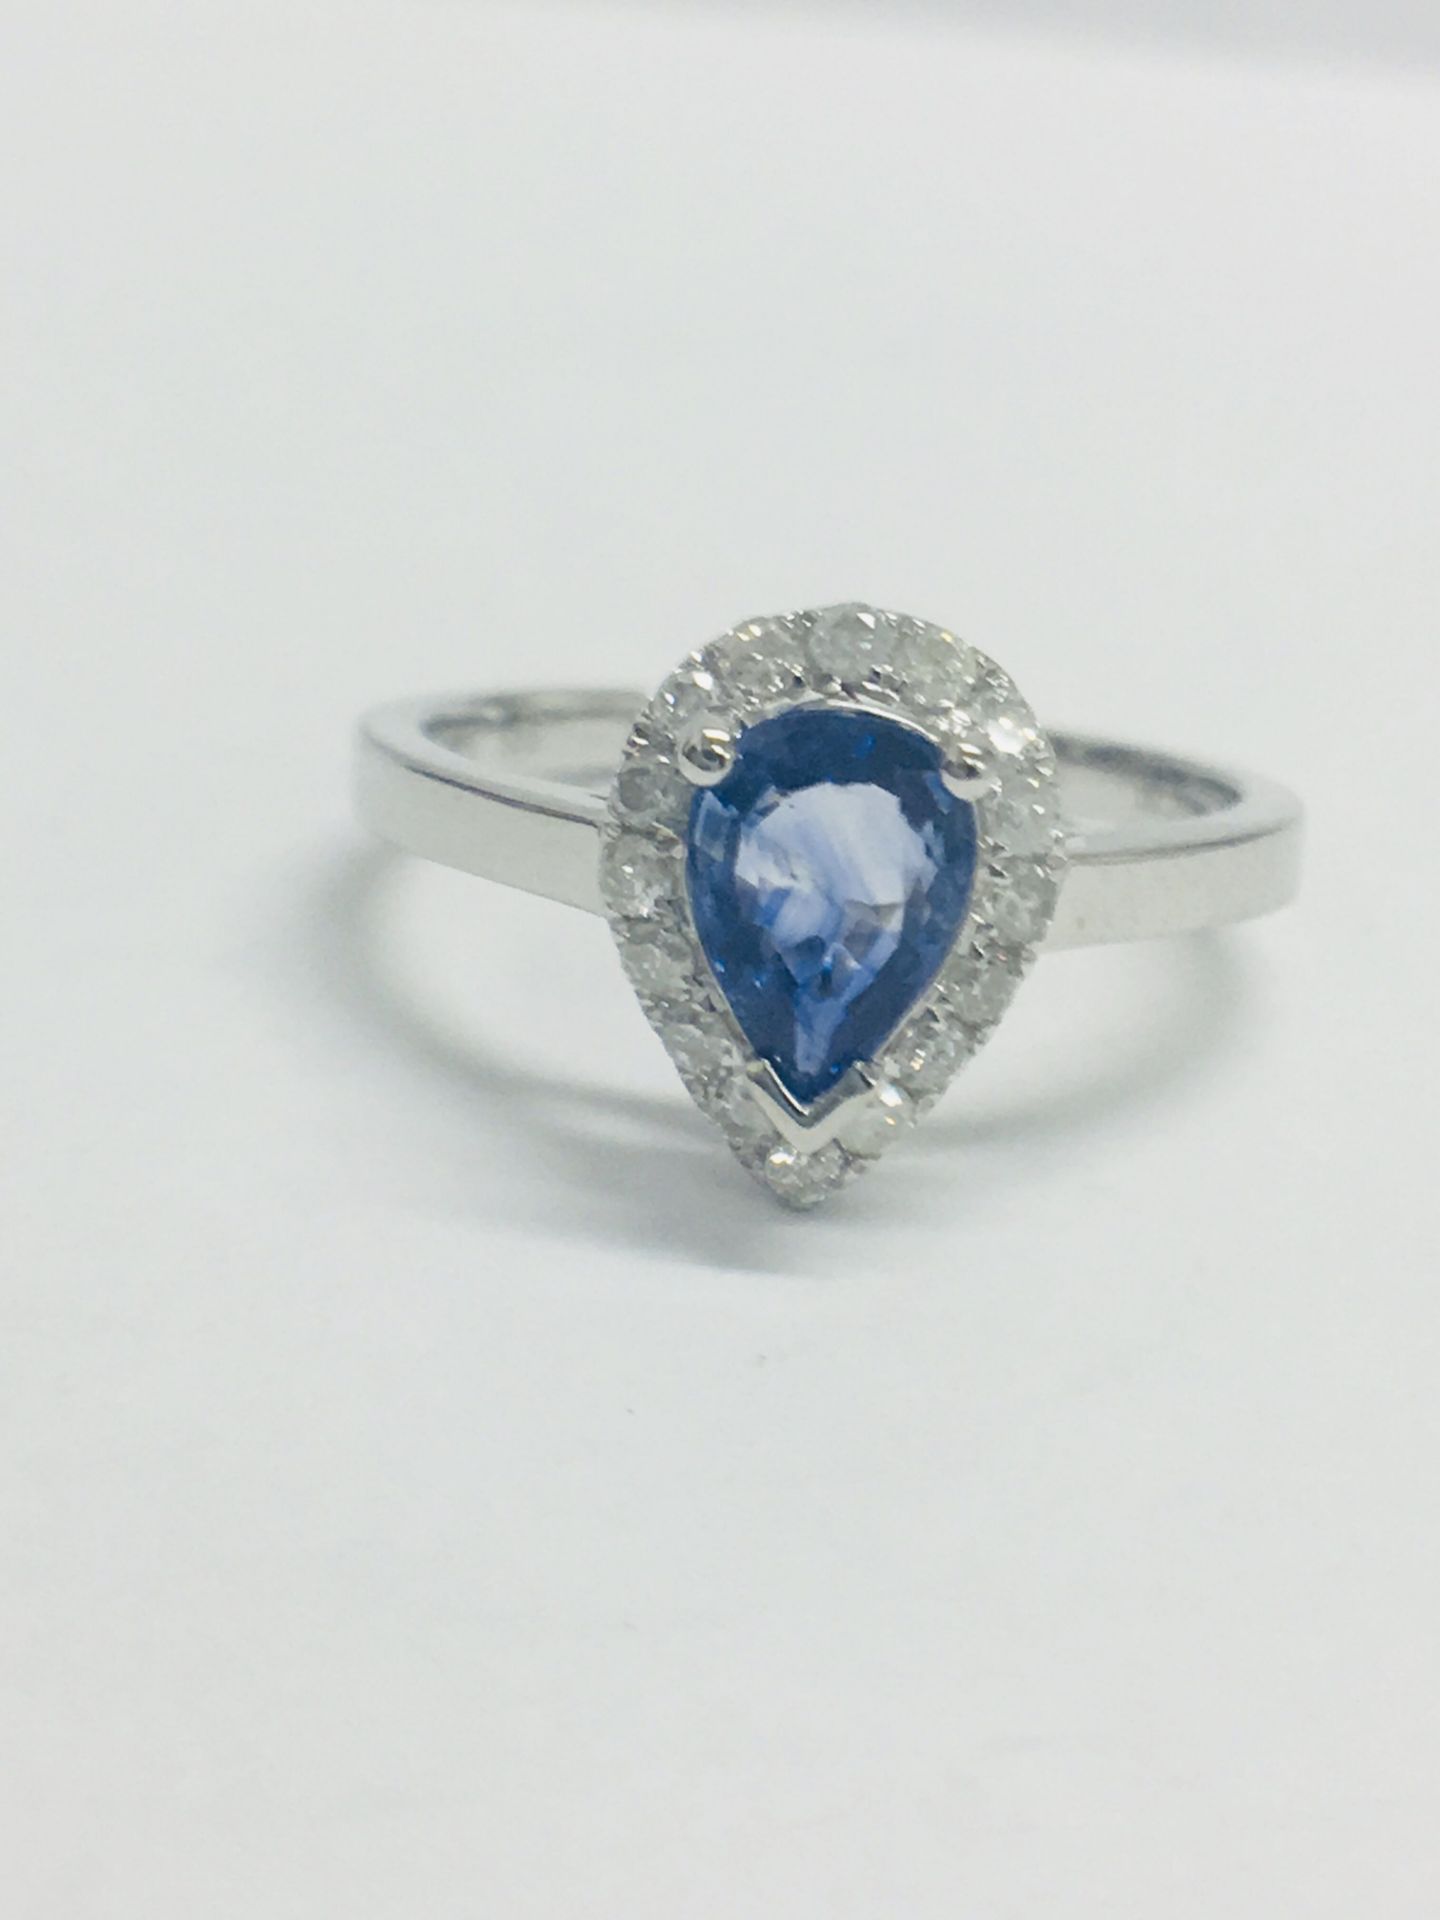 14ct White Gold Sapphire & Diamond Ring